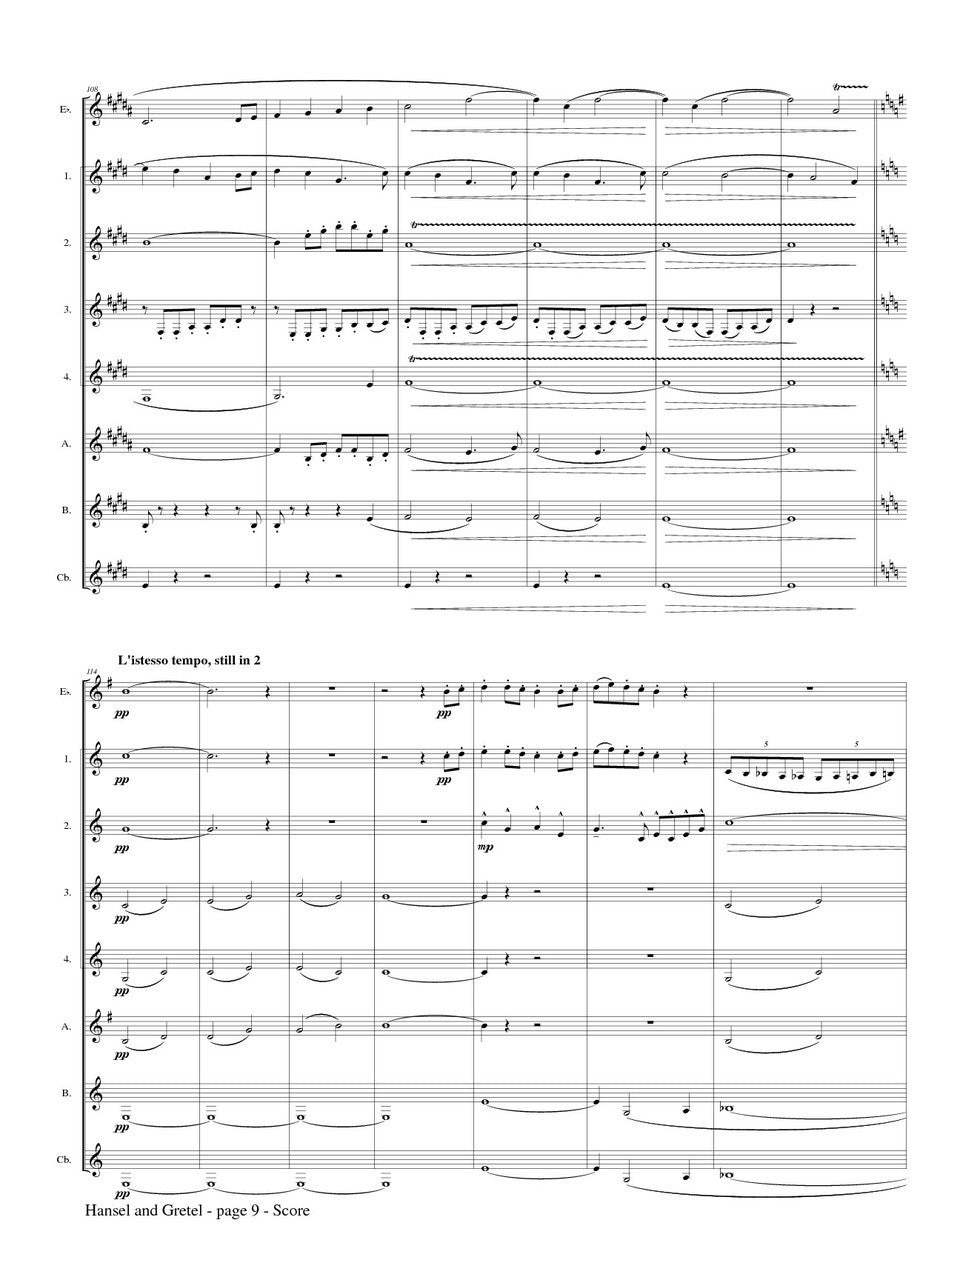 Humperdinck (arr. Matt Johnston) - Overture to 'Hansel and Gretel' for Clarinet Choir